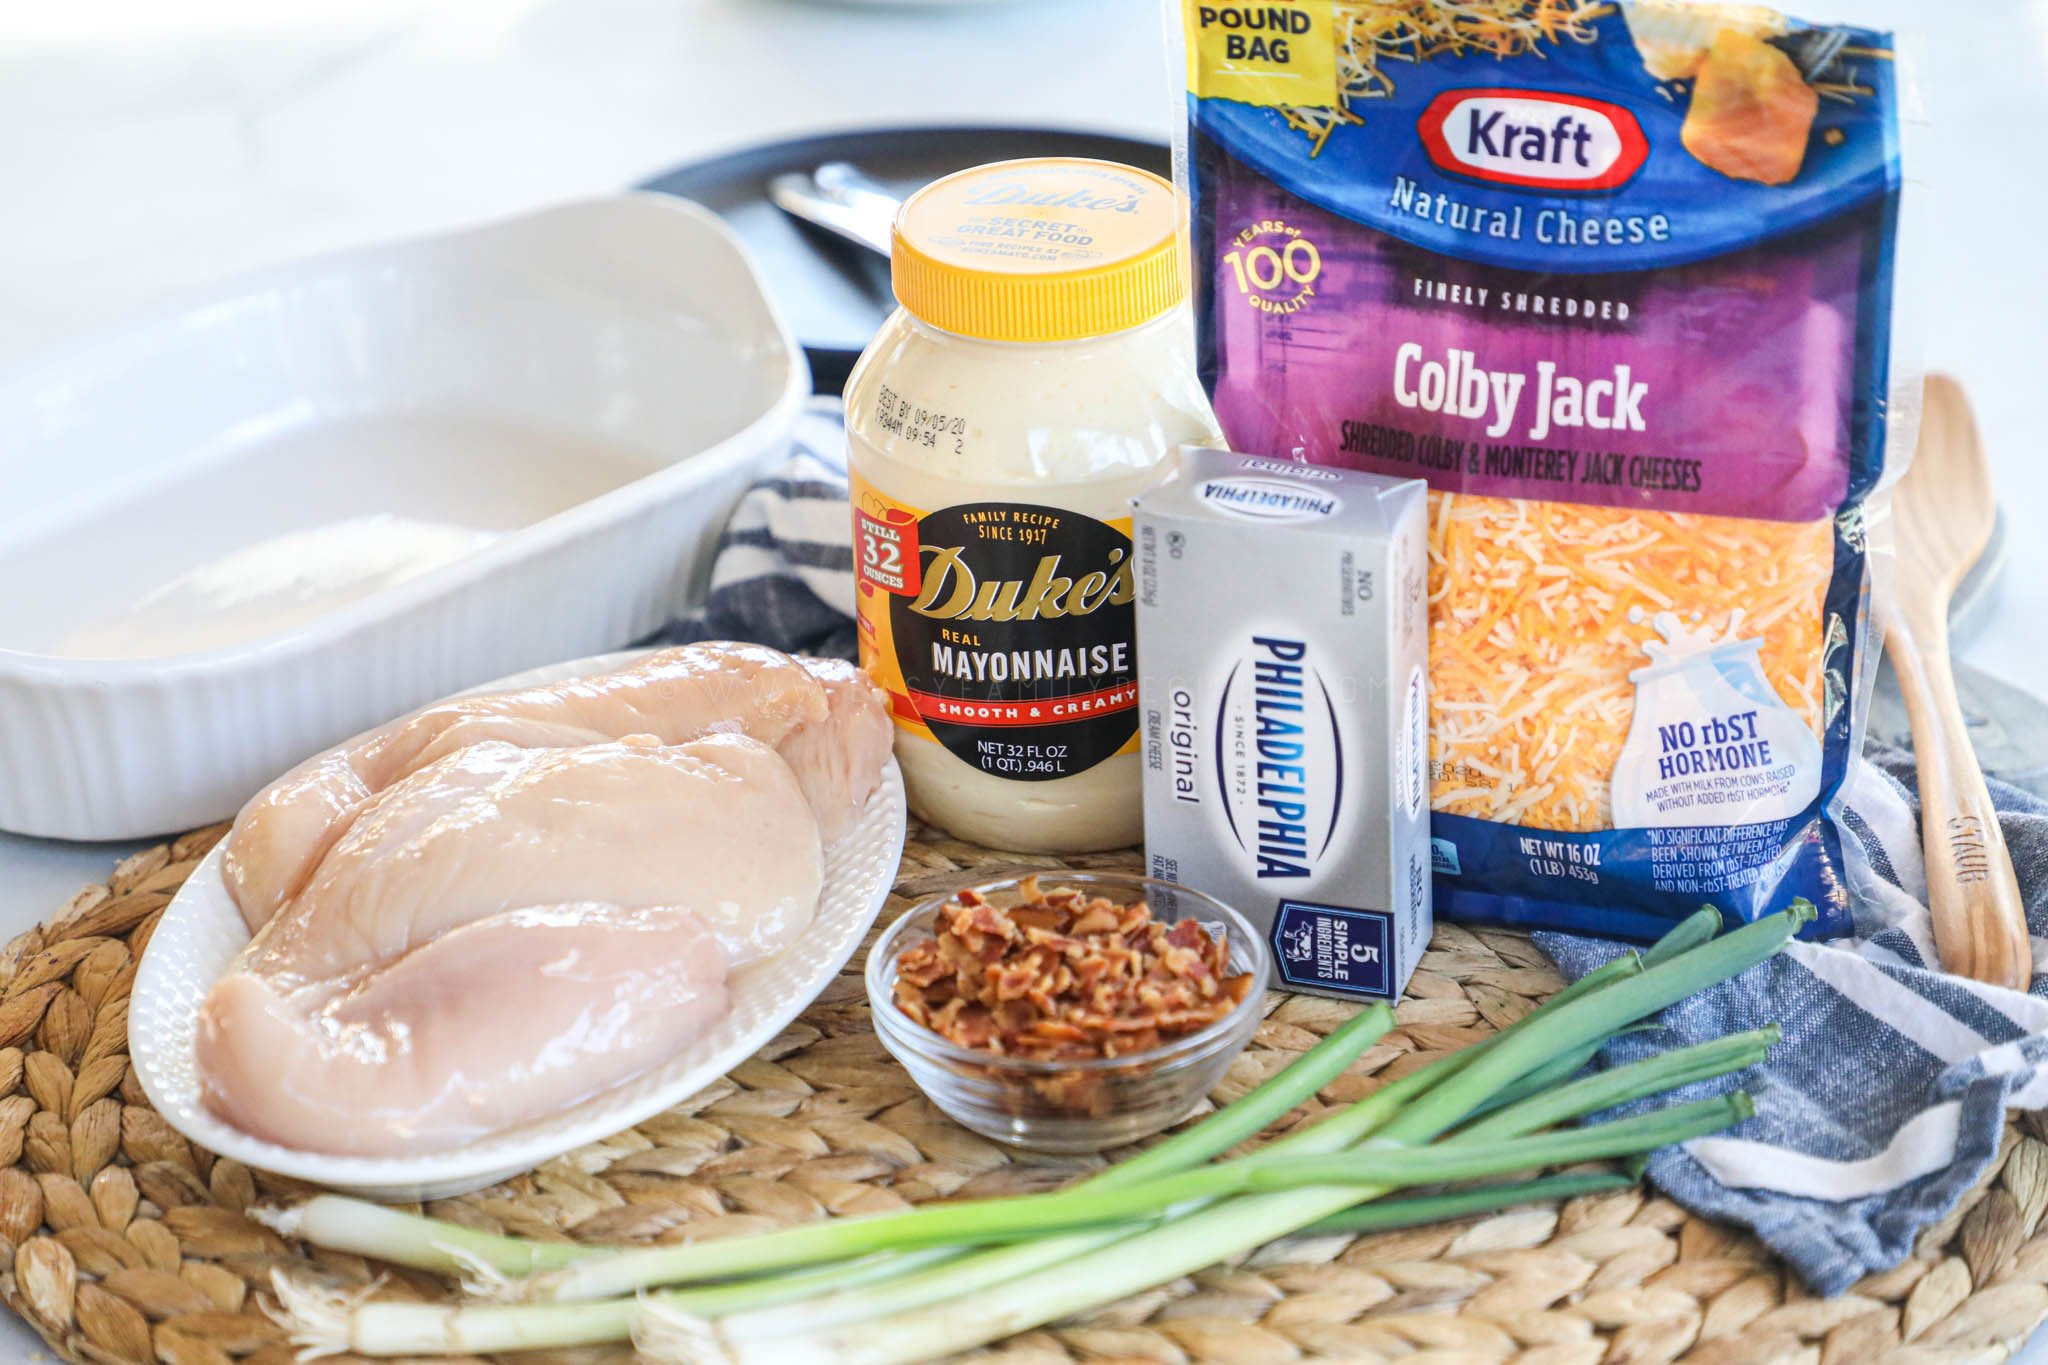 Million Dollar Chicken Ingredients including mayo, cream cheese, cheddar, chicken breast, green onions, bacon